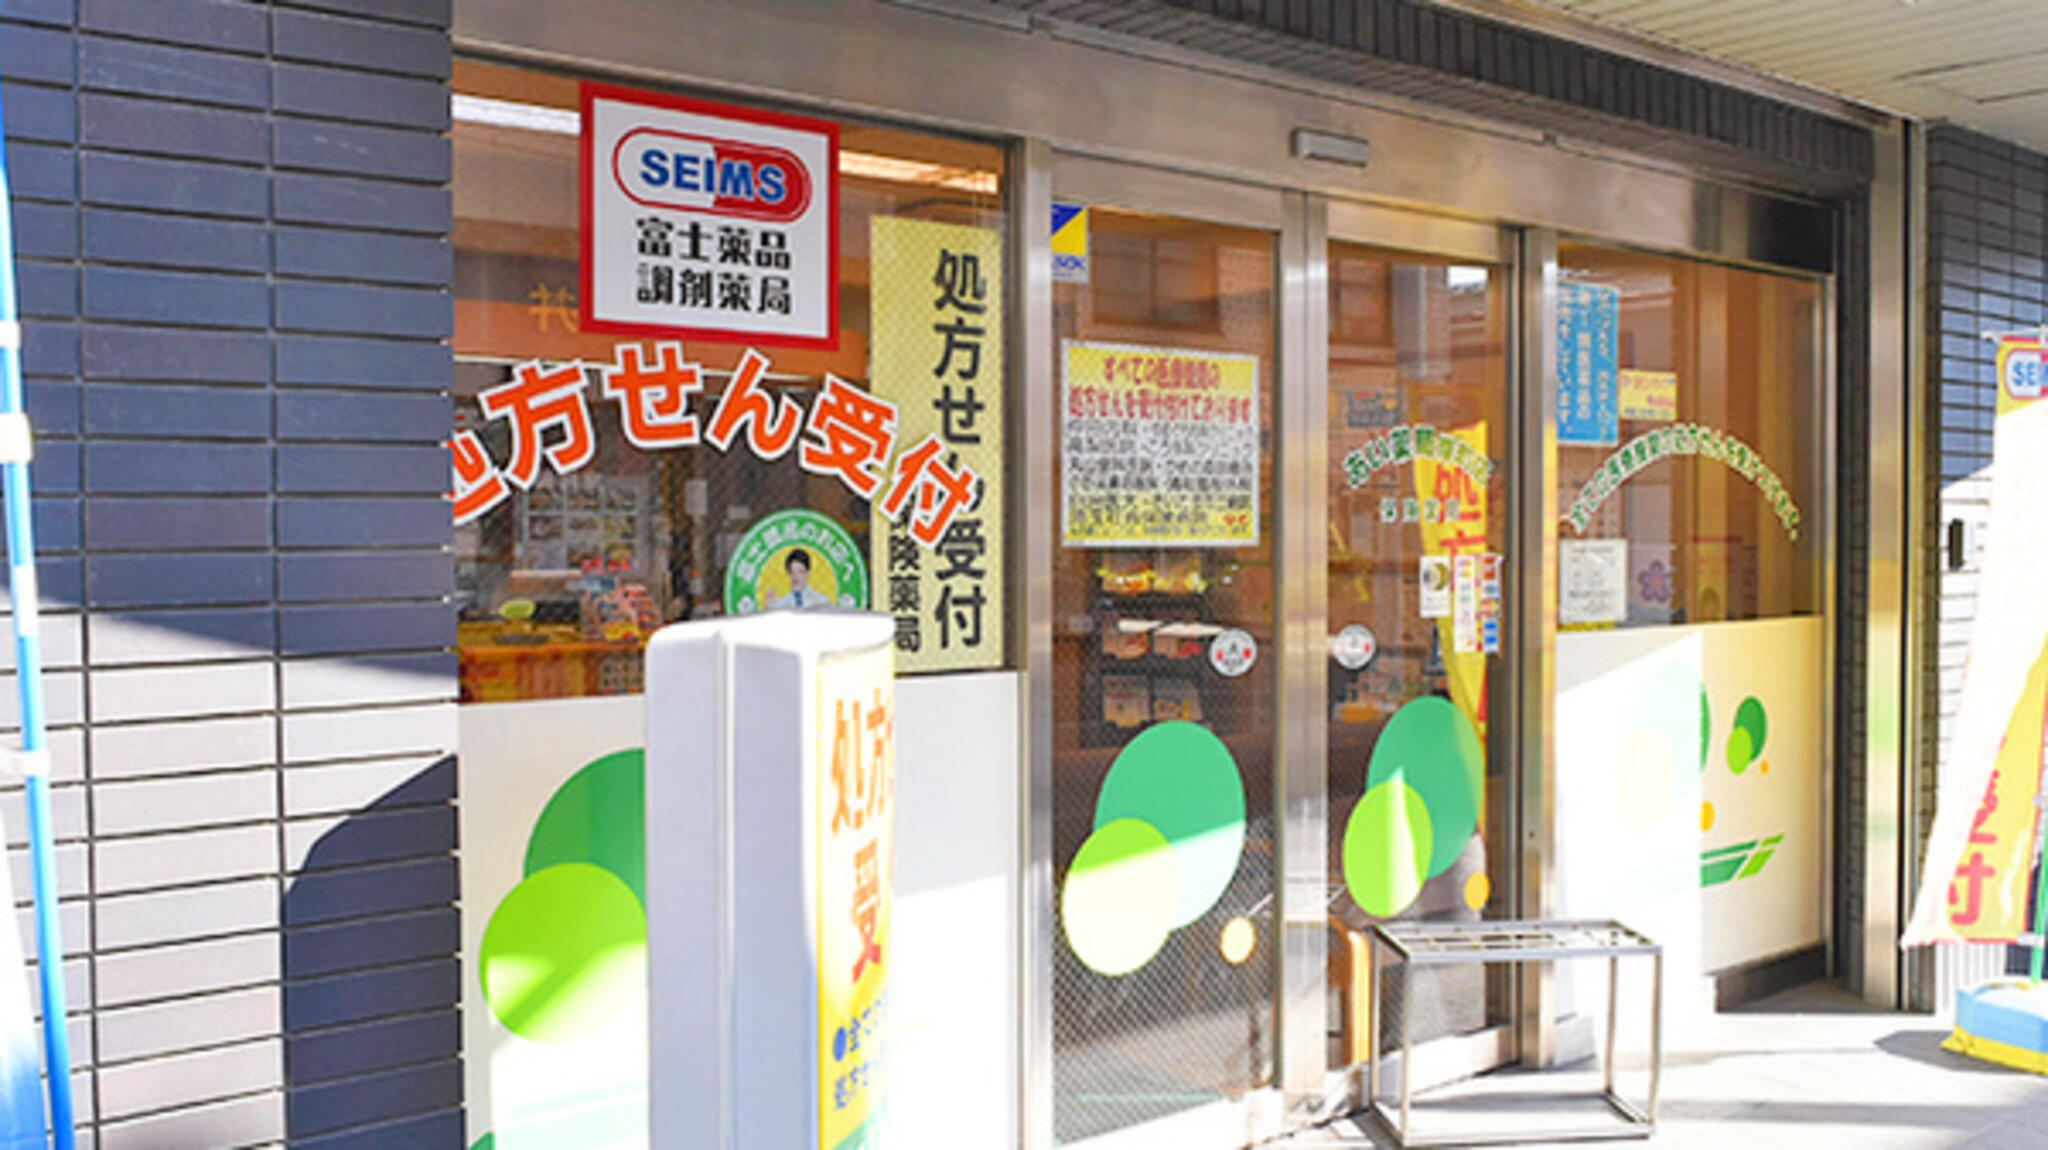 富士薬品 セイムス浦和駅西口薬局の代表写真3